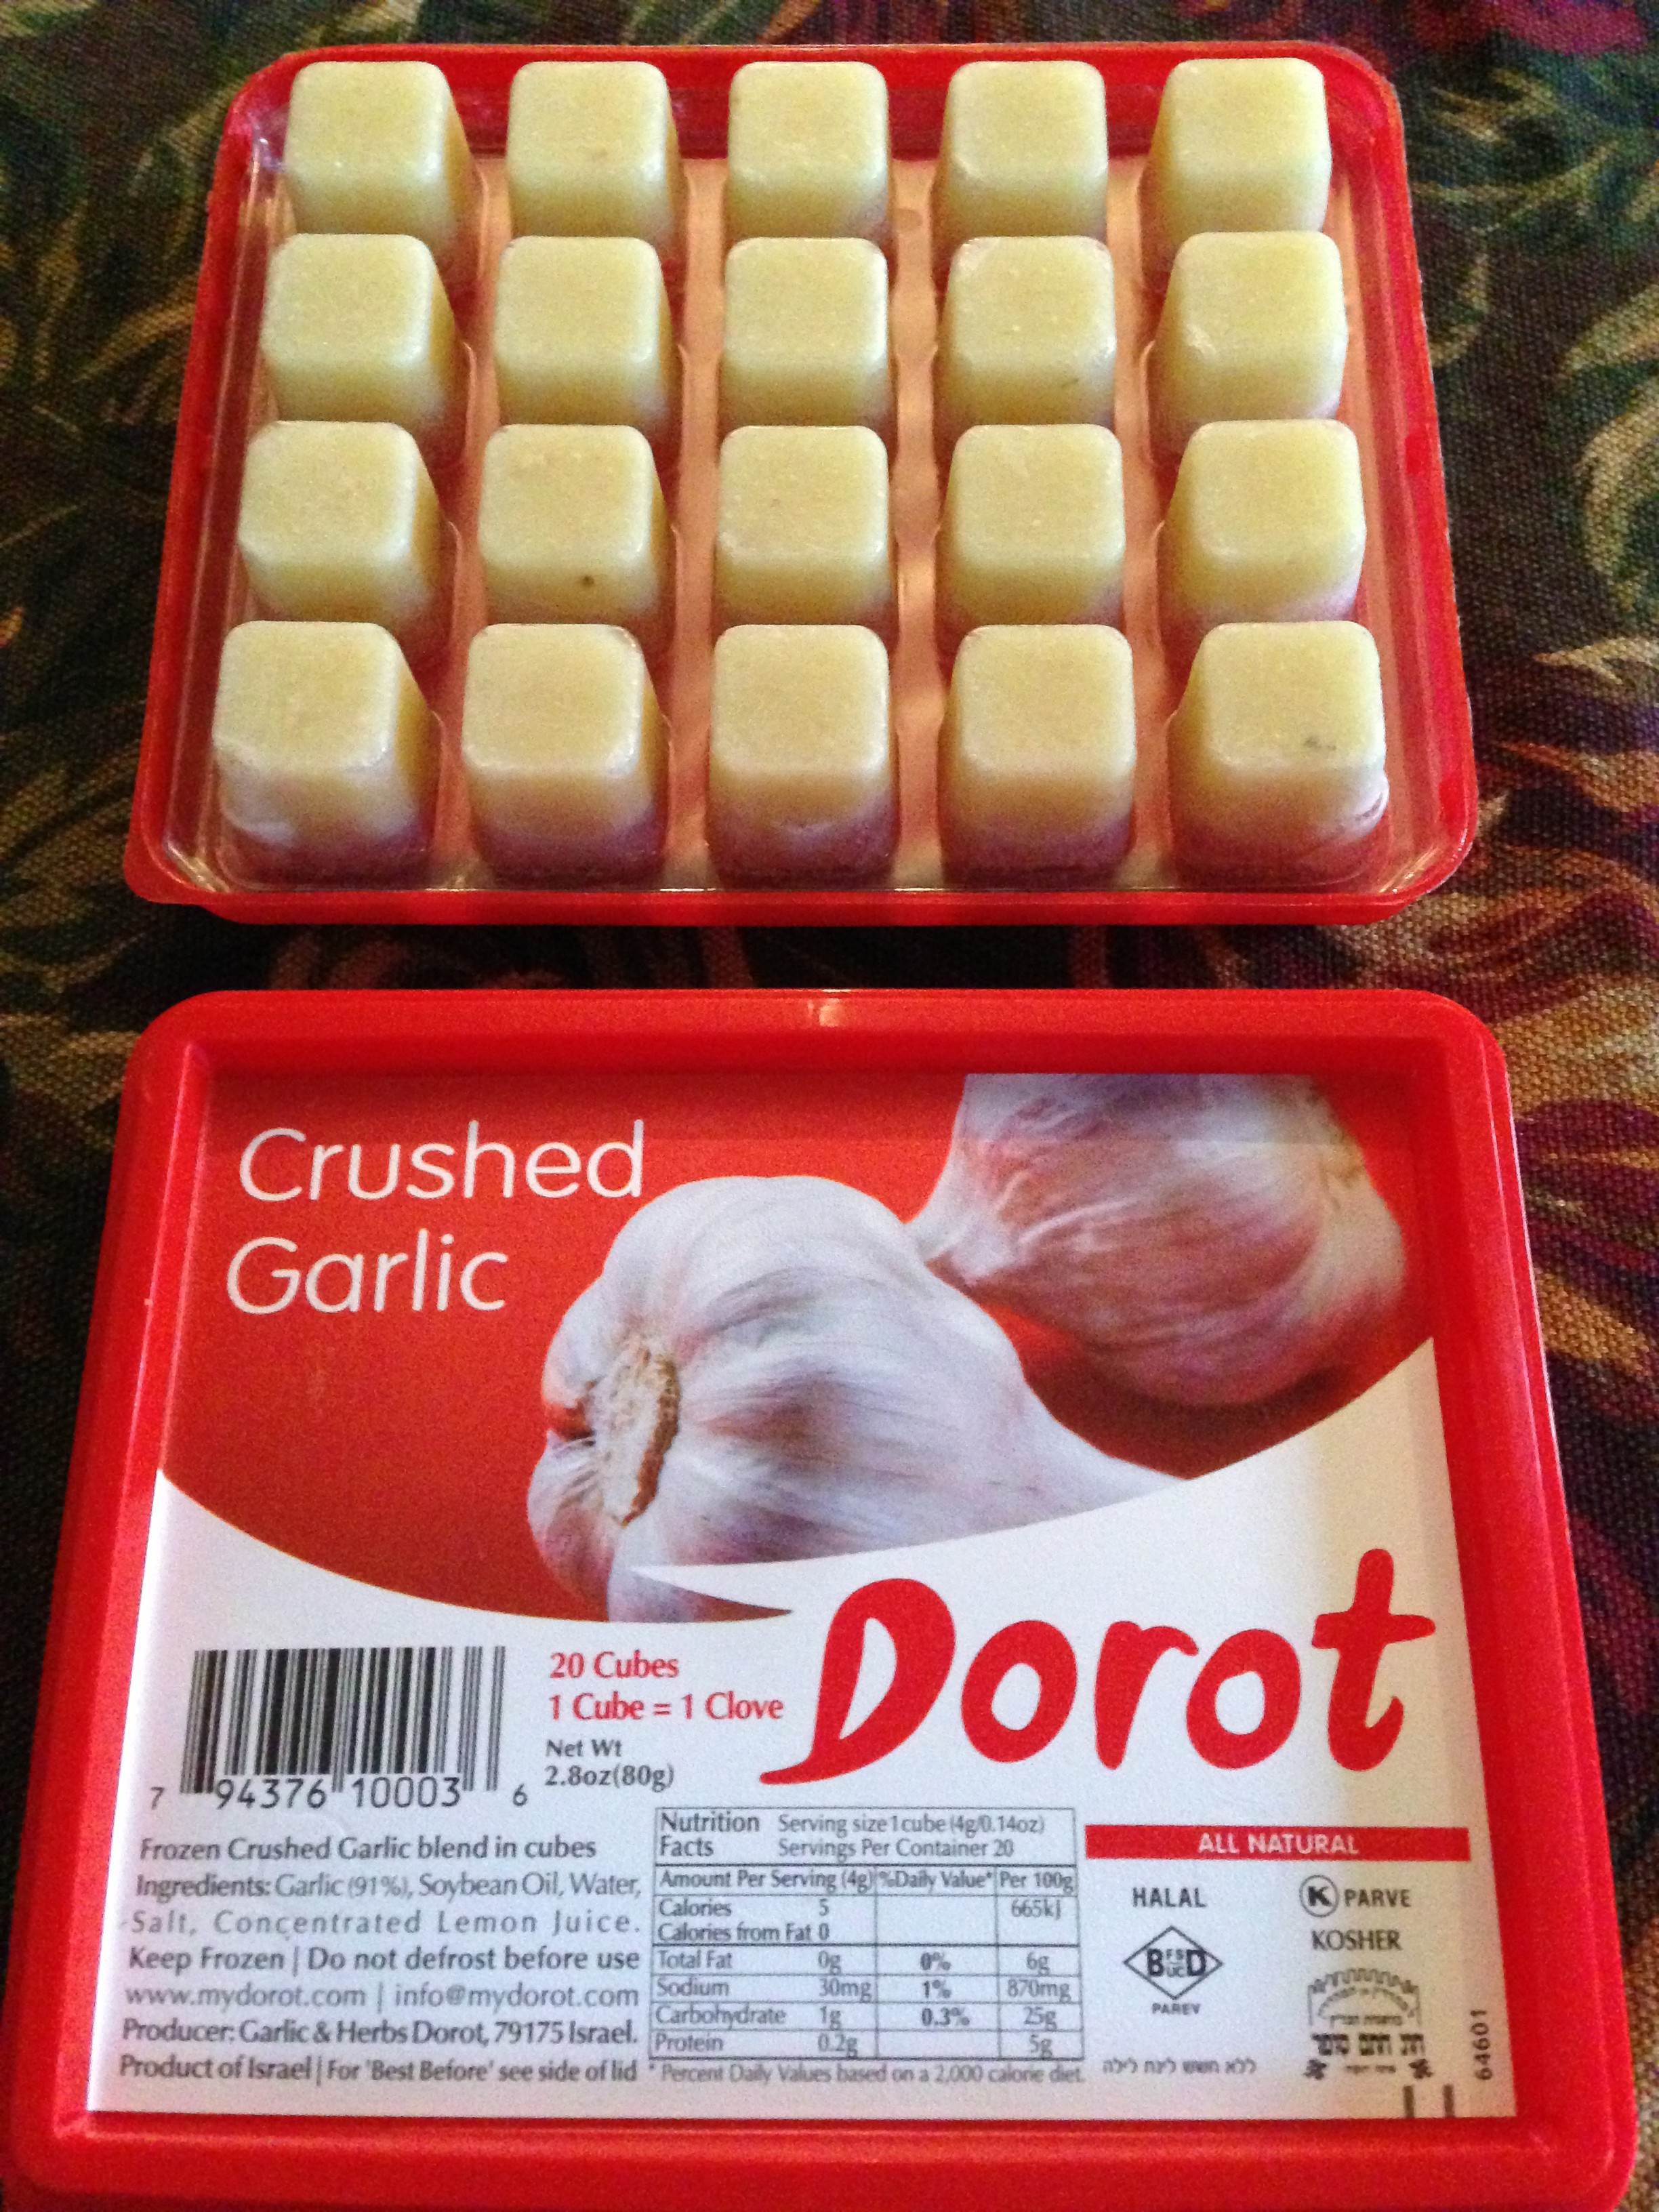 Dorot Frozen Garlic Cubes - One Cube Equals One Clove Garlic (Photo Credit: Adroit Ideals)